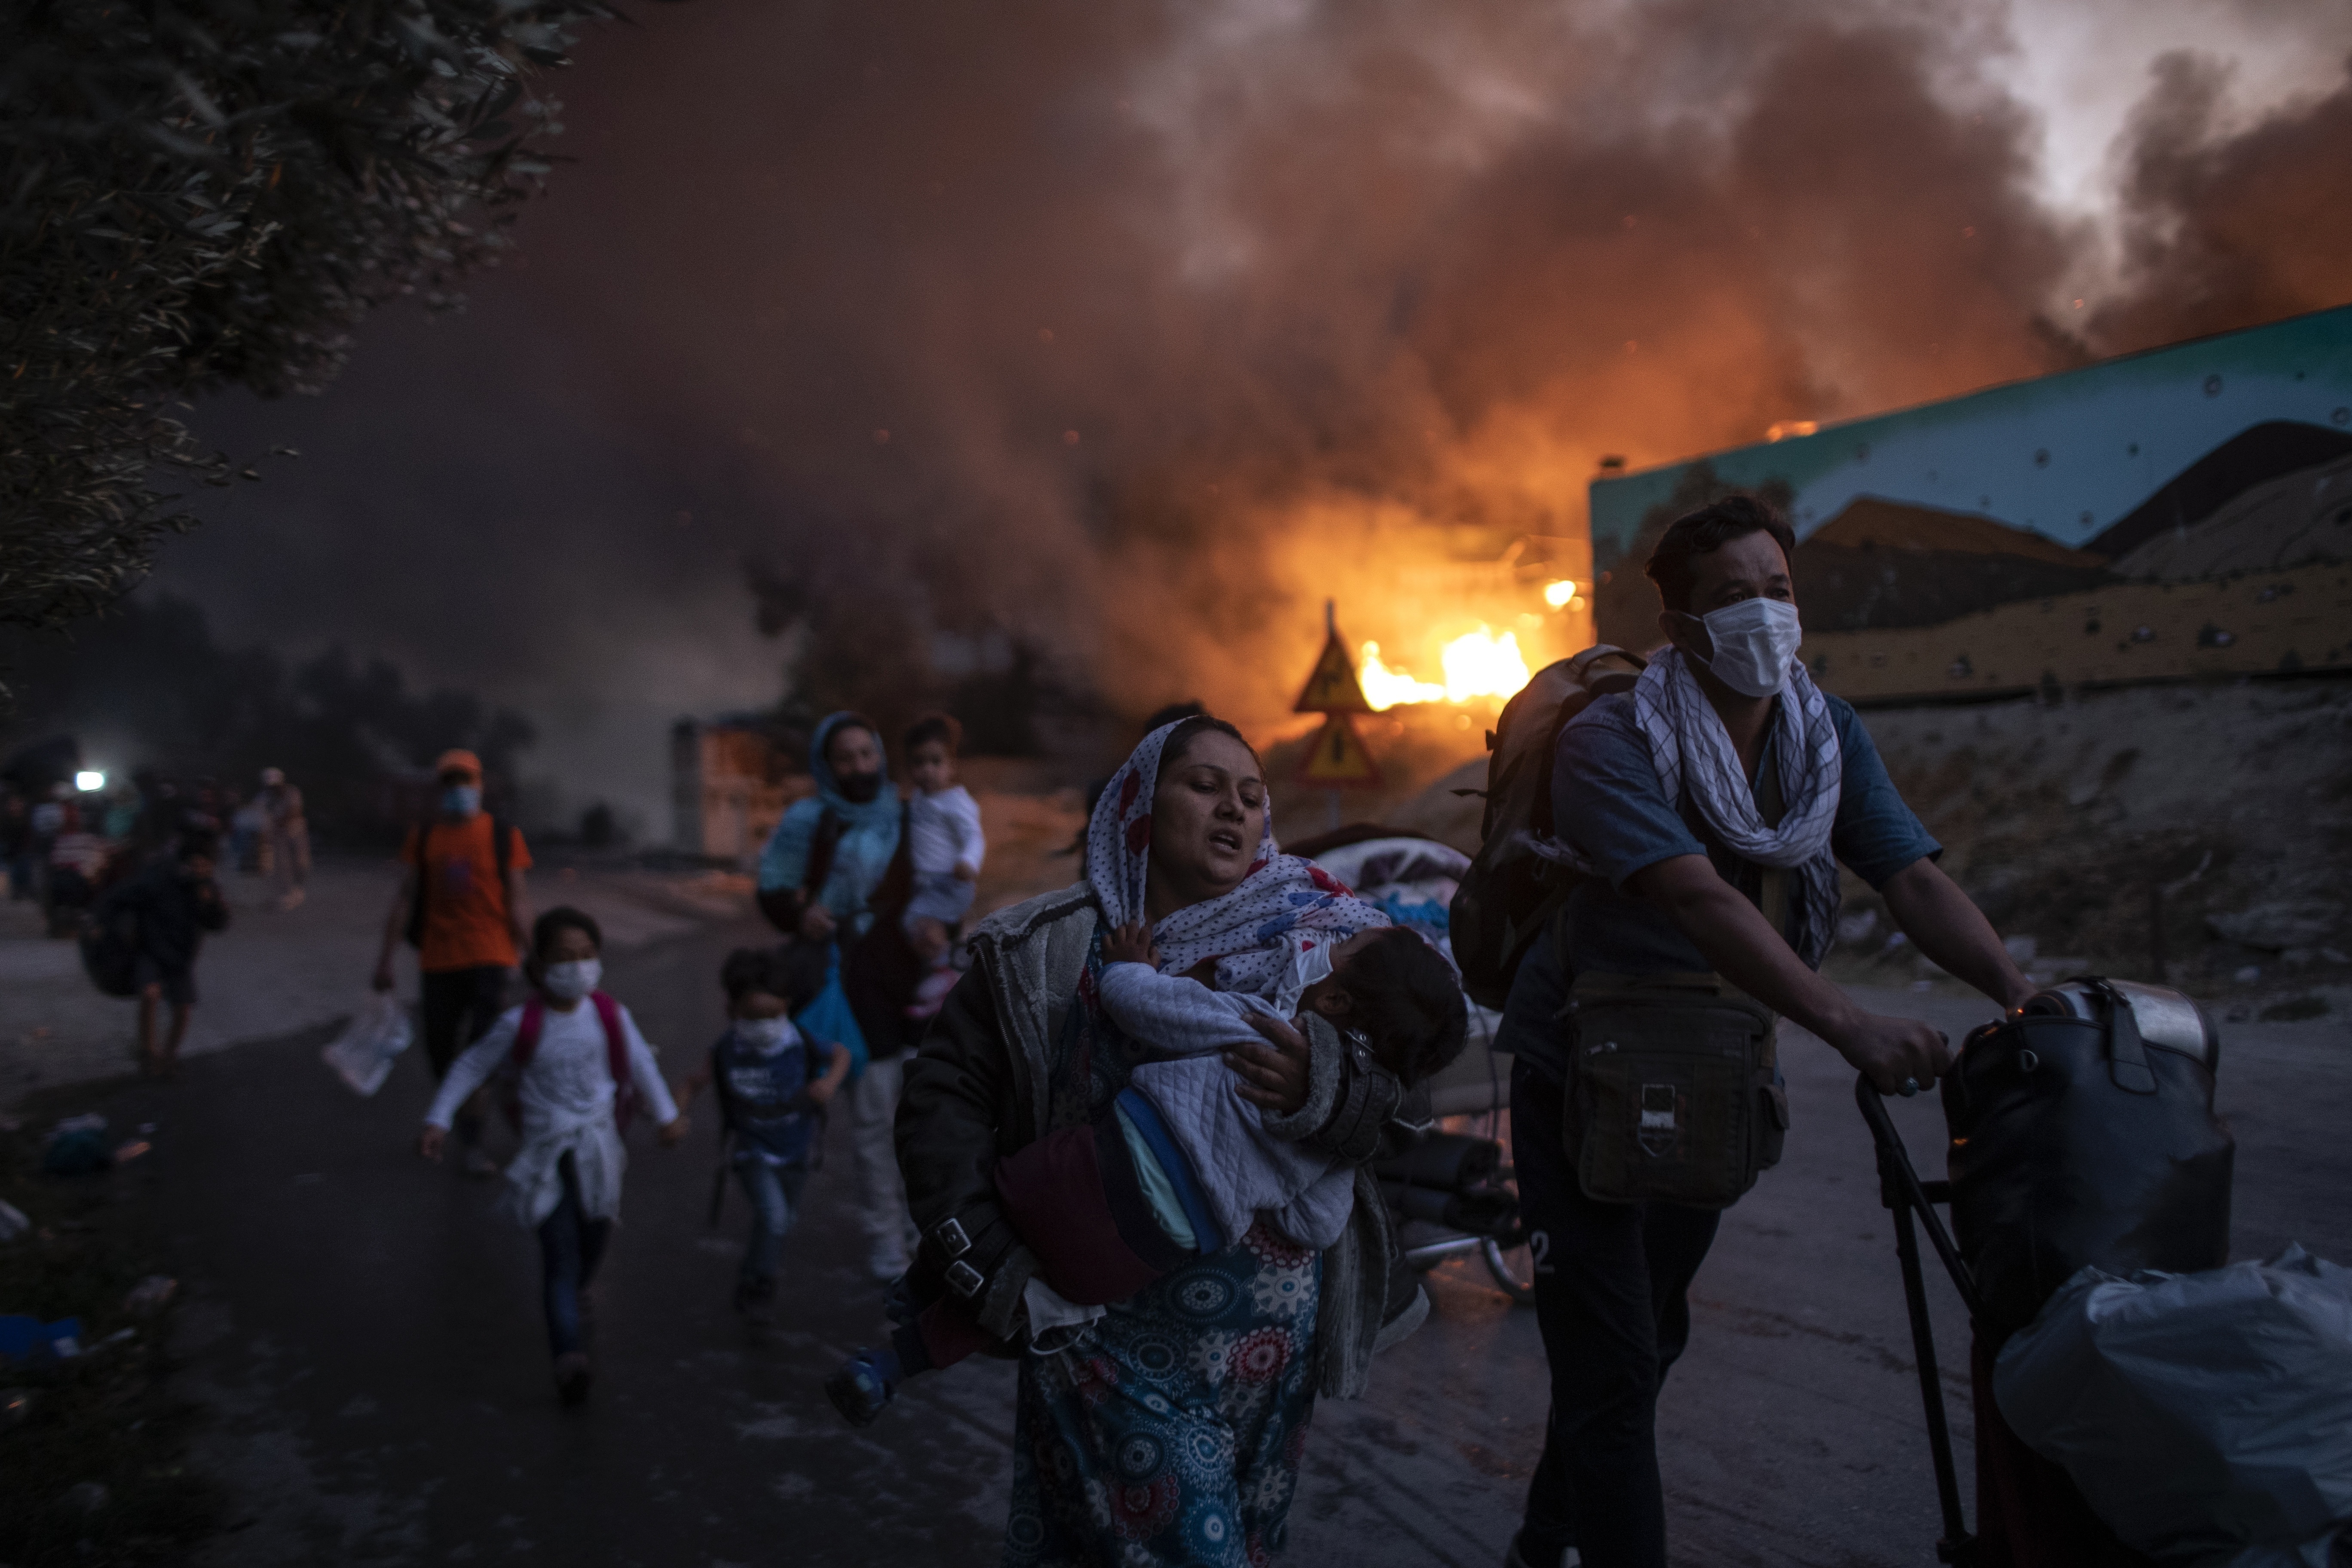 Moria-leiren brant ned i september. Foto: Petros Giannakouris / AP / NTB